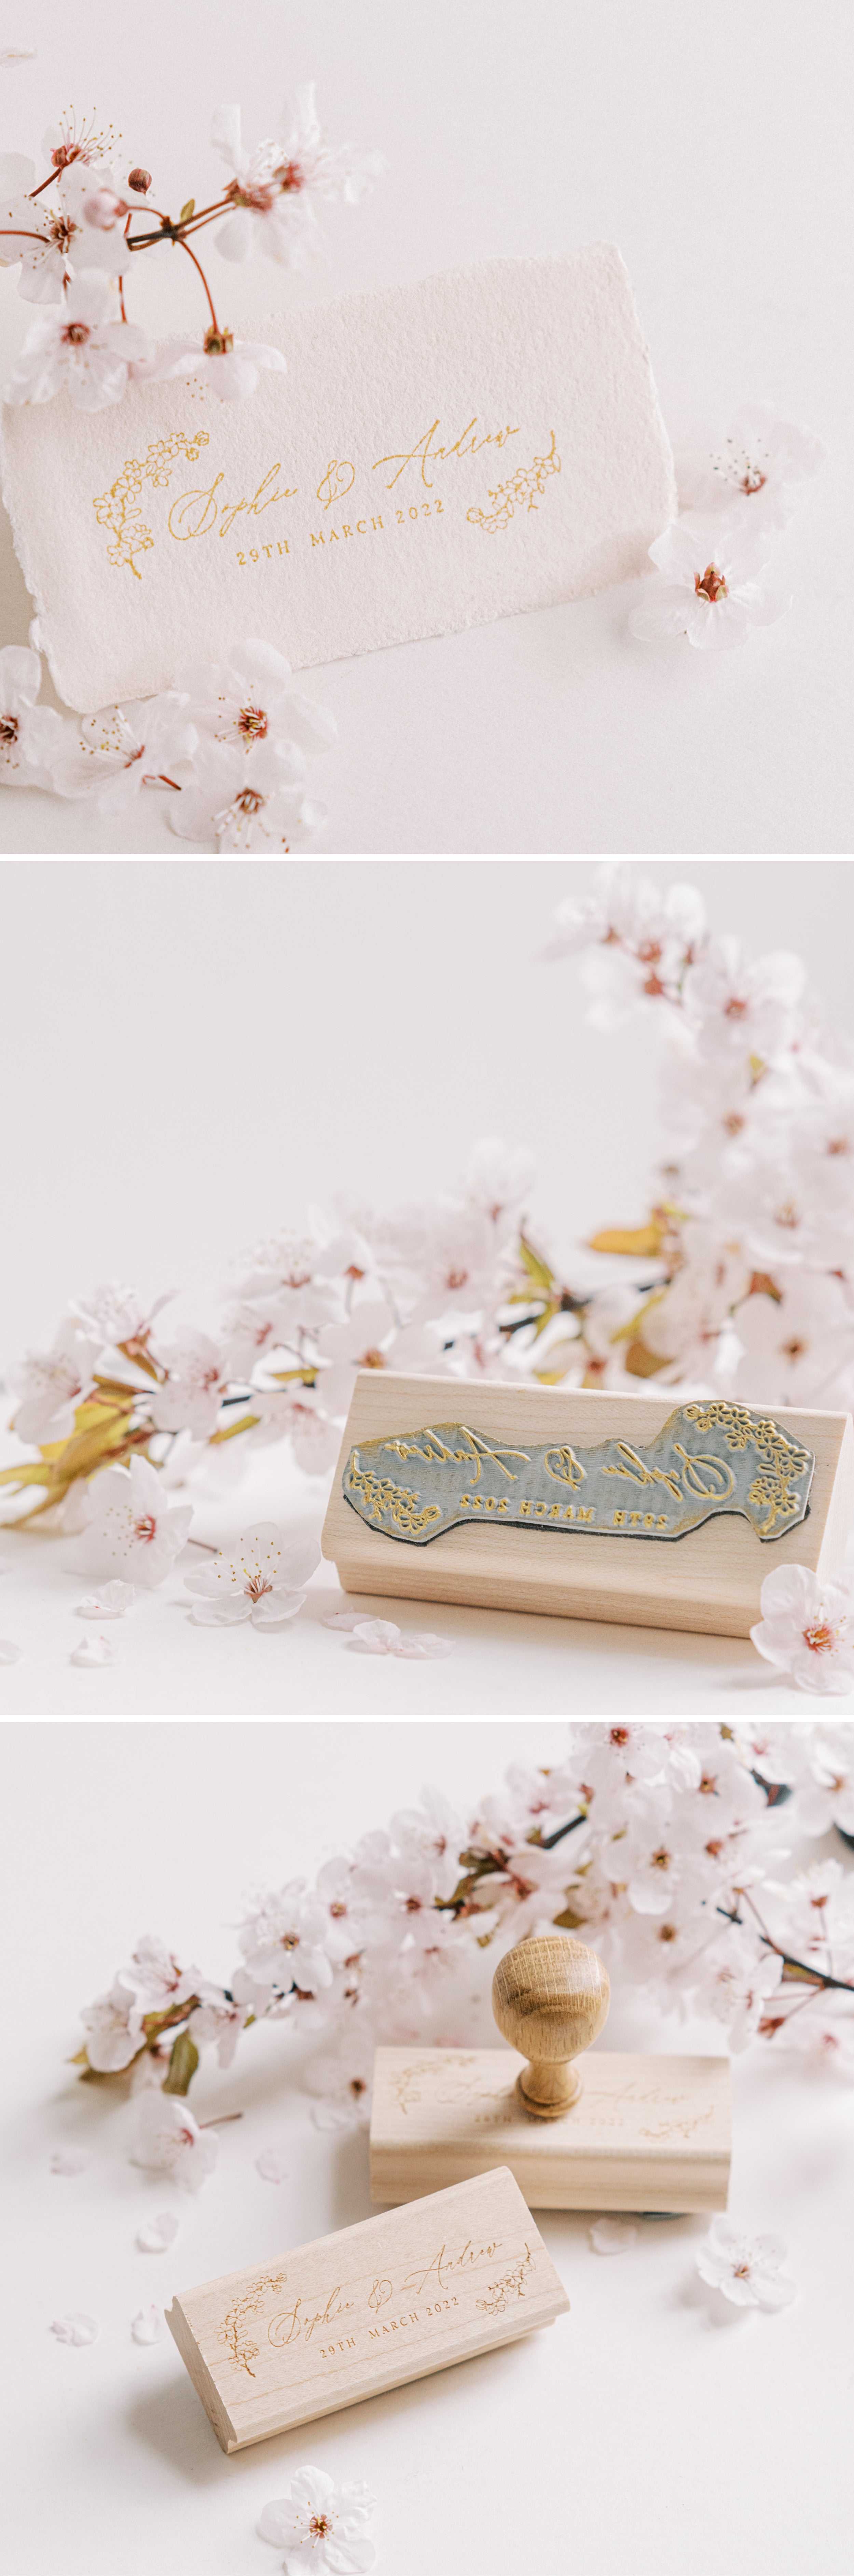 Suki Cherry Blossom Save The Date Rubber Stamp Design | 'Sakura' Cherry Blossom Embellishments for Blush Pink Spring Wedding | Heirloom Seals